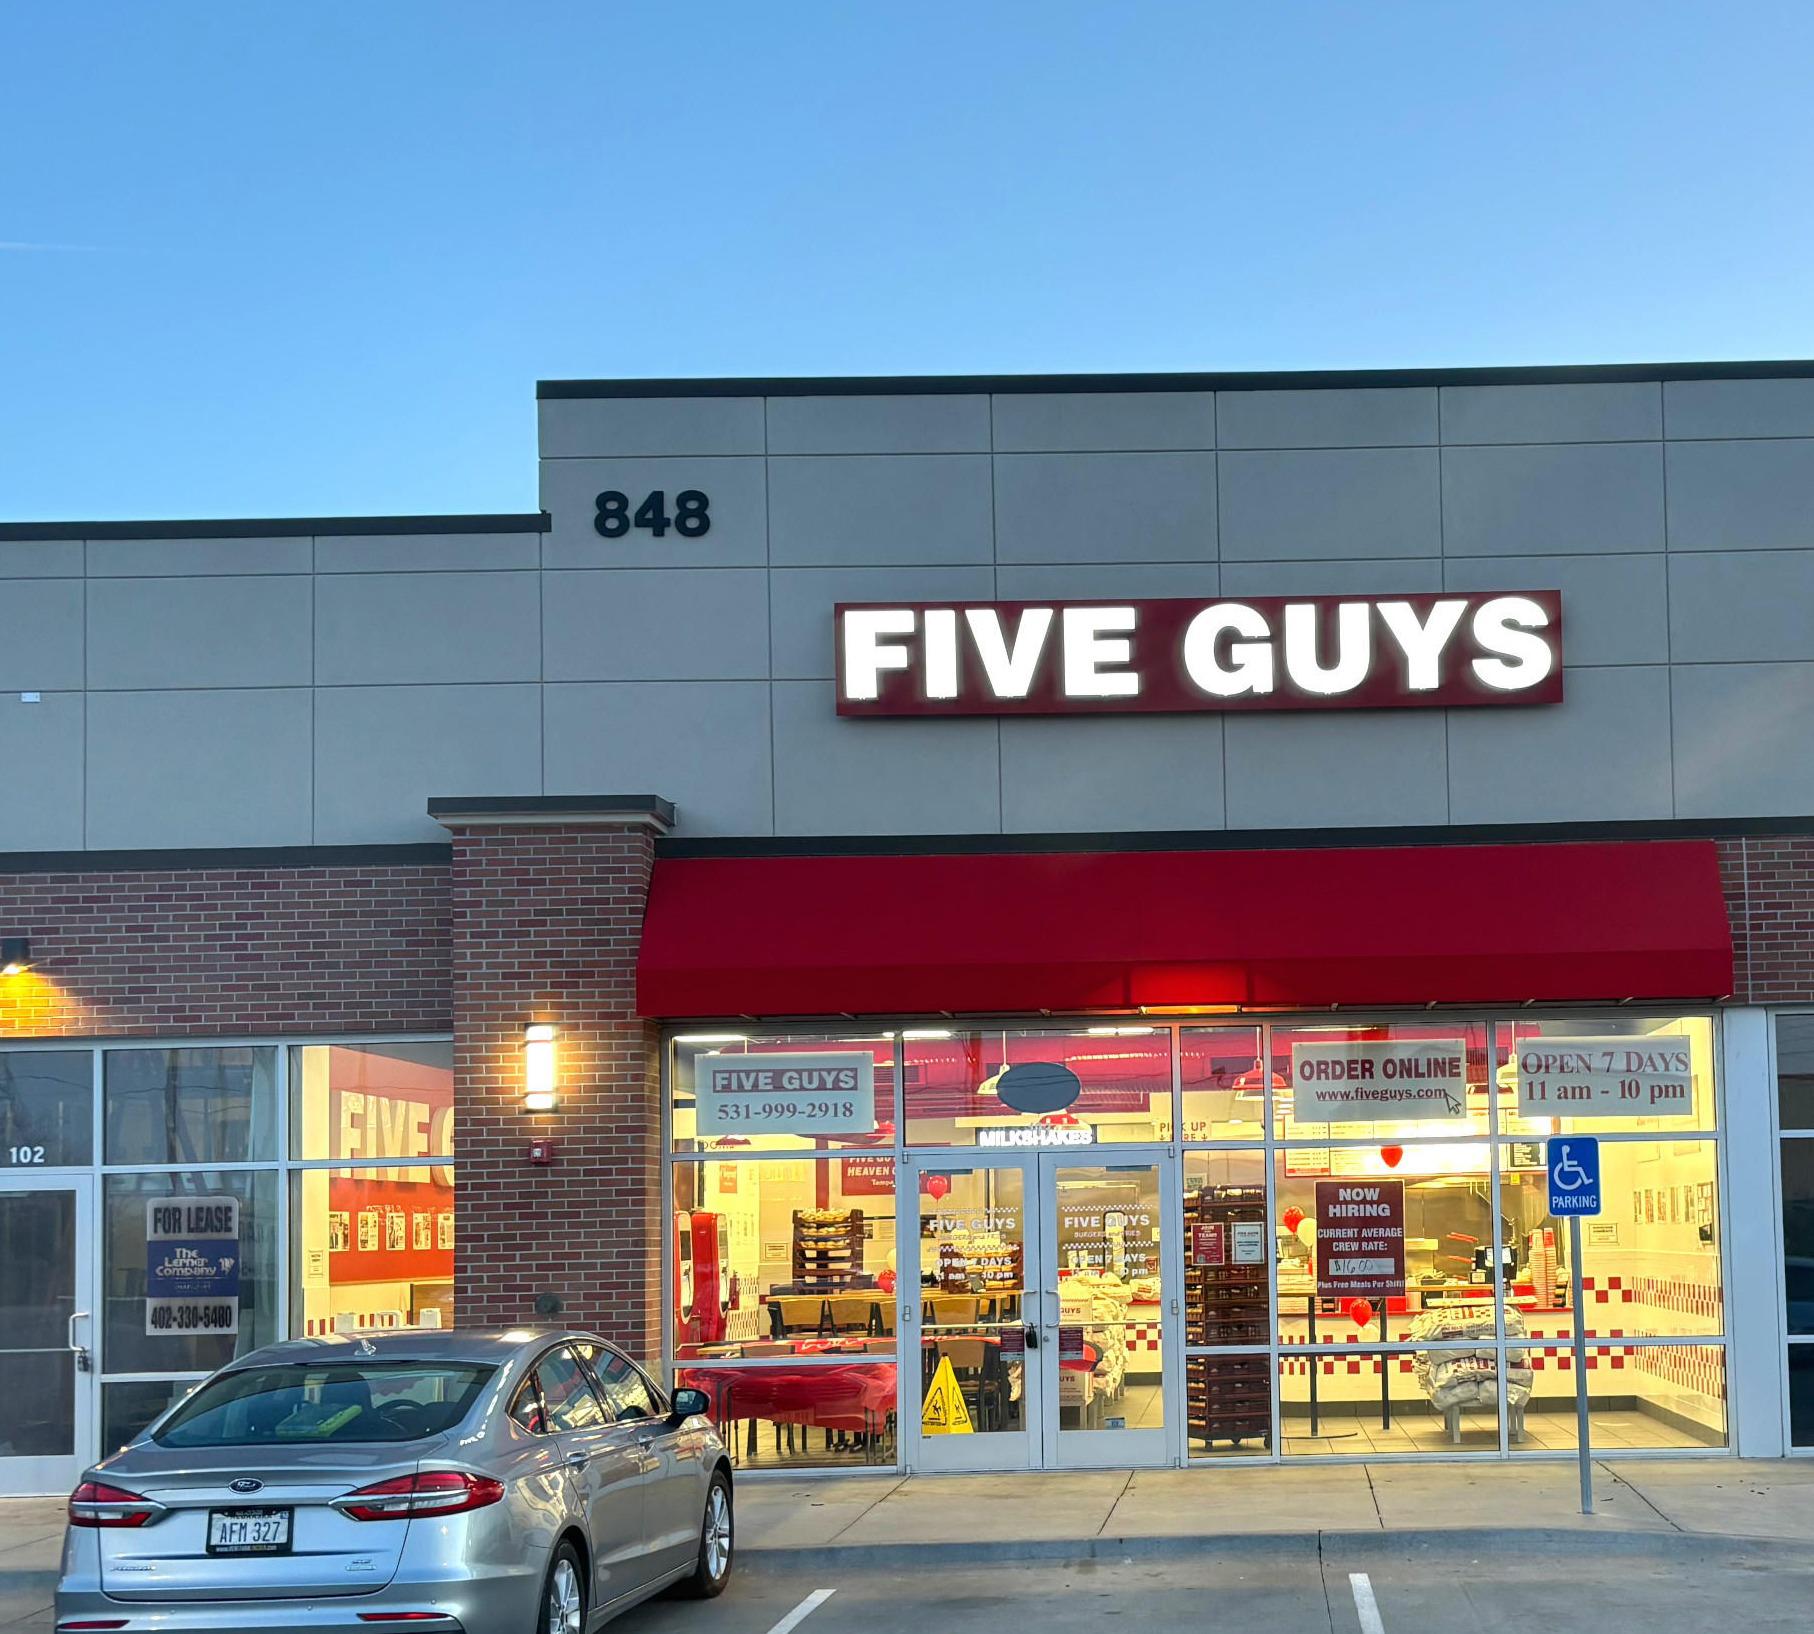 Exterior photograph of the Five Guys restaurant at 848 Cornhusker Road in Bellevue, Nebraska.